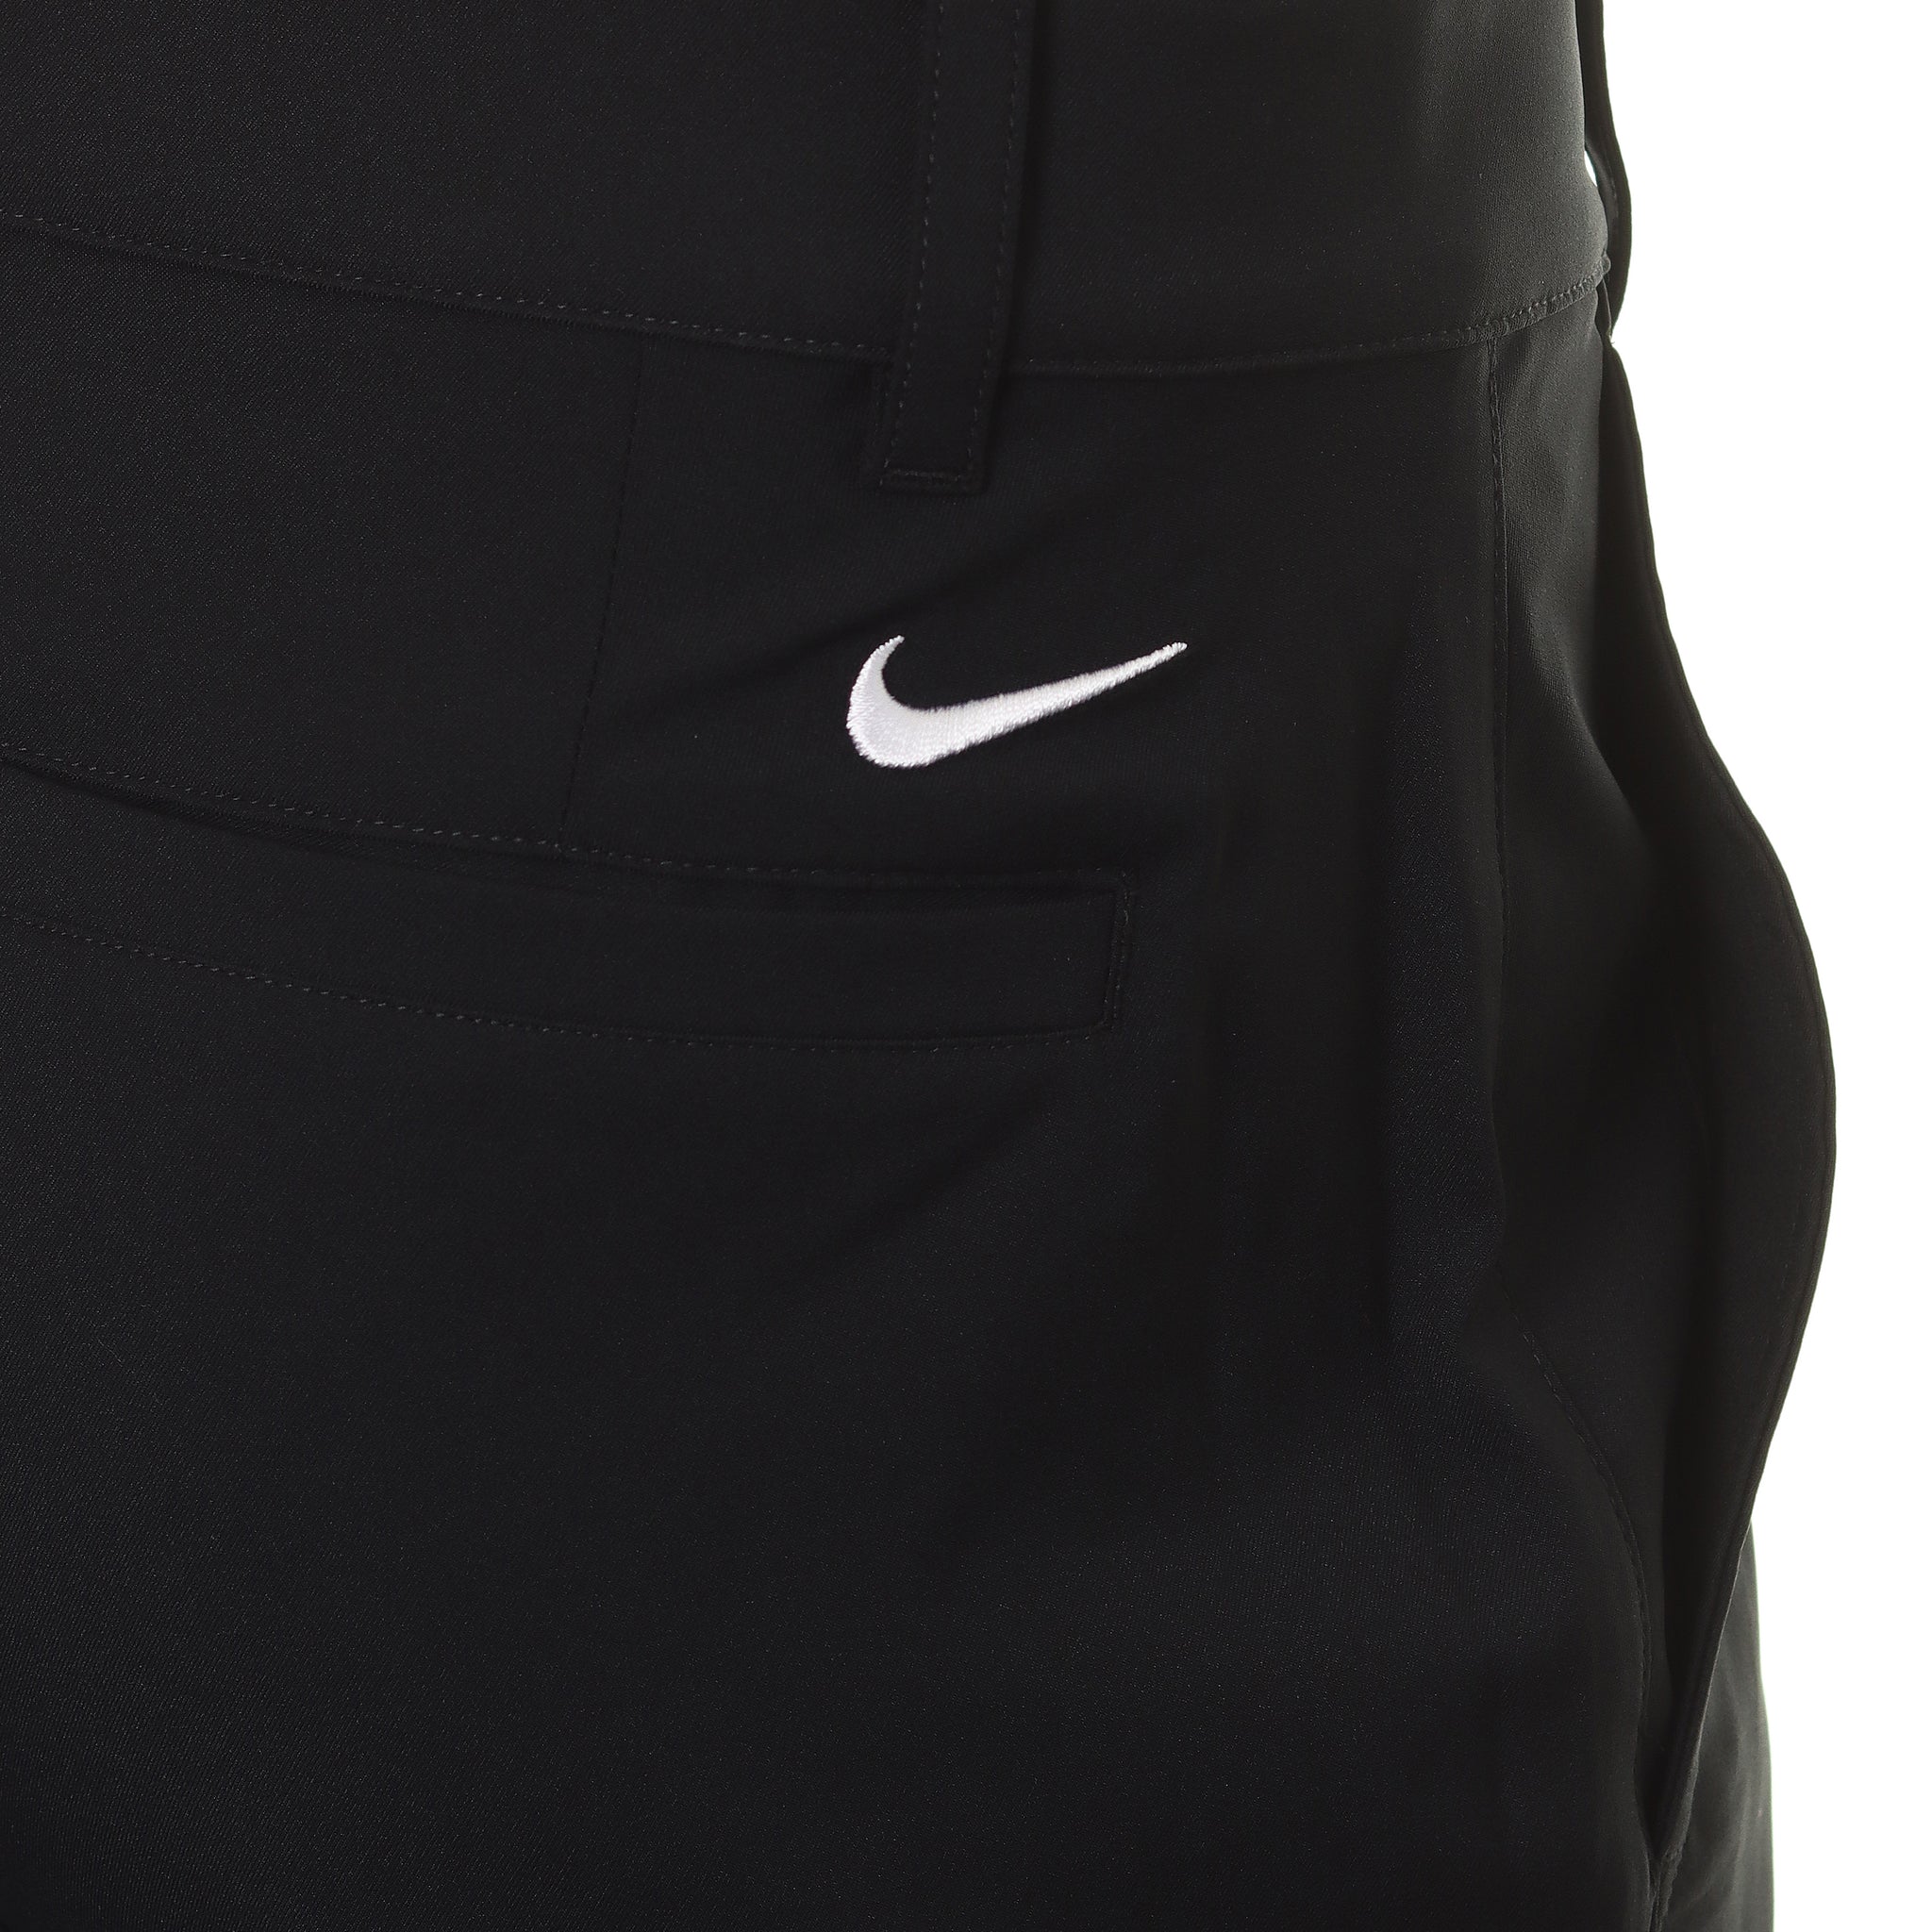 Nike Dri-FIT UV Men's Slim-Fit Golf Chino Pants, Black, 34W x 30L :  Clothing, Shoes & Jewelry - Amazon.com